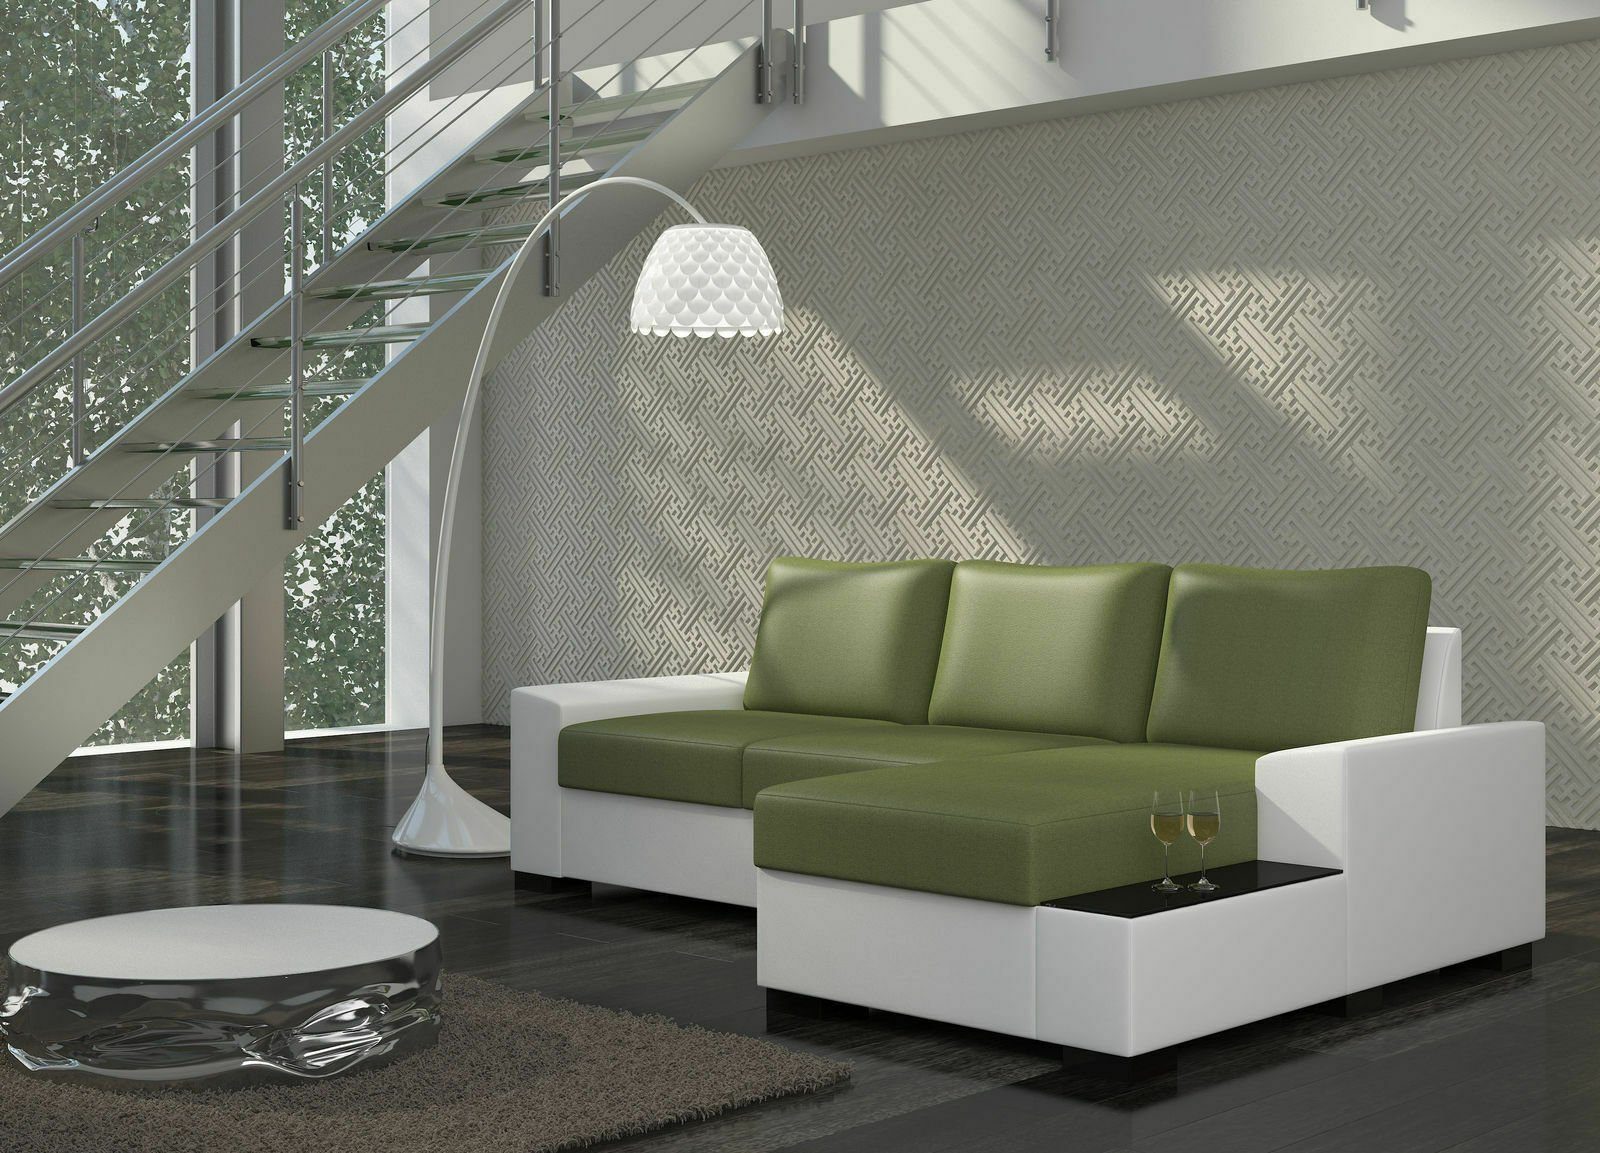 JVmoebel Ecksofa Design Ecksofa Schlafsofa Bettfunktion Sofa Couch Leder Polster, Mit Bettfunktion Grün / Weiß